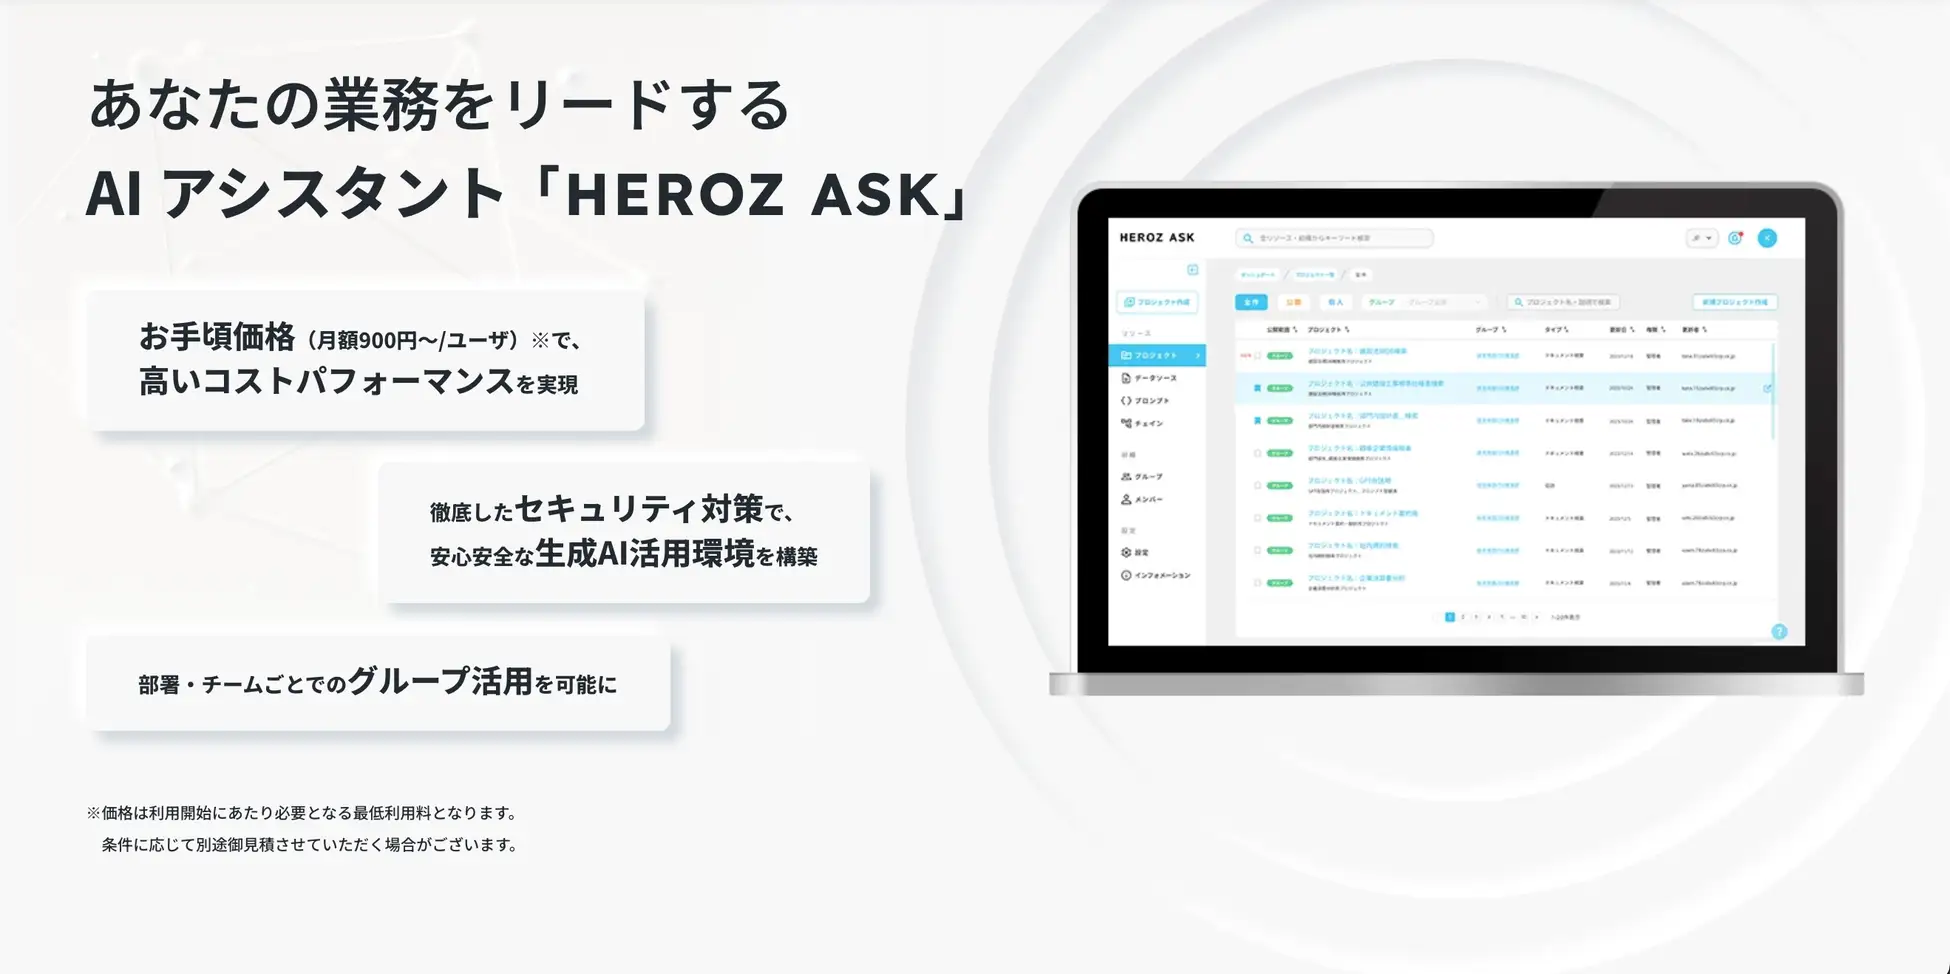 HEROZ ASK: 企業向け生成AIアシスタント